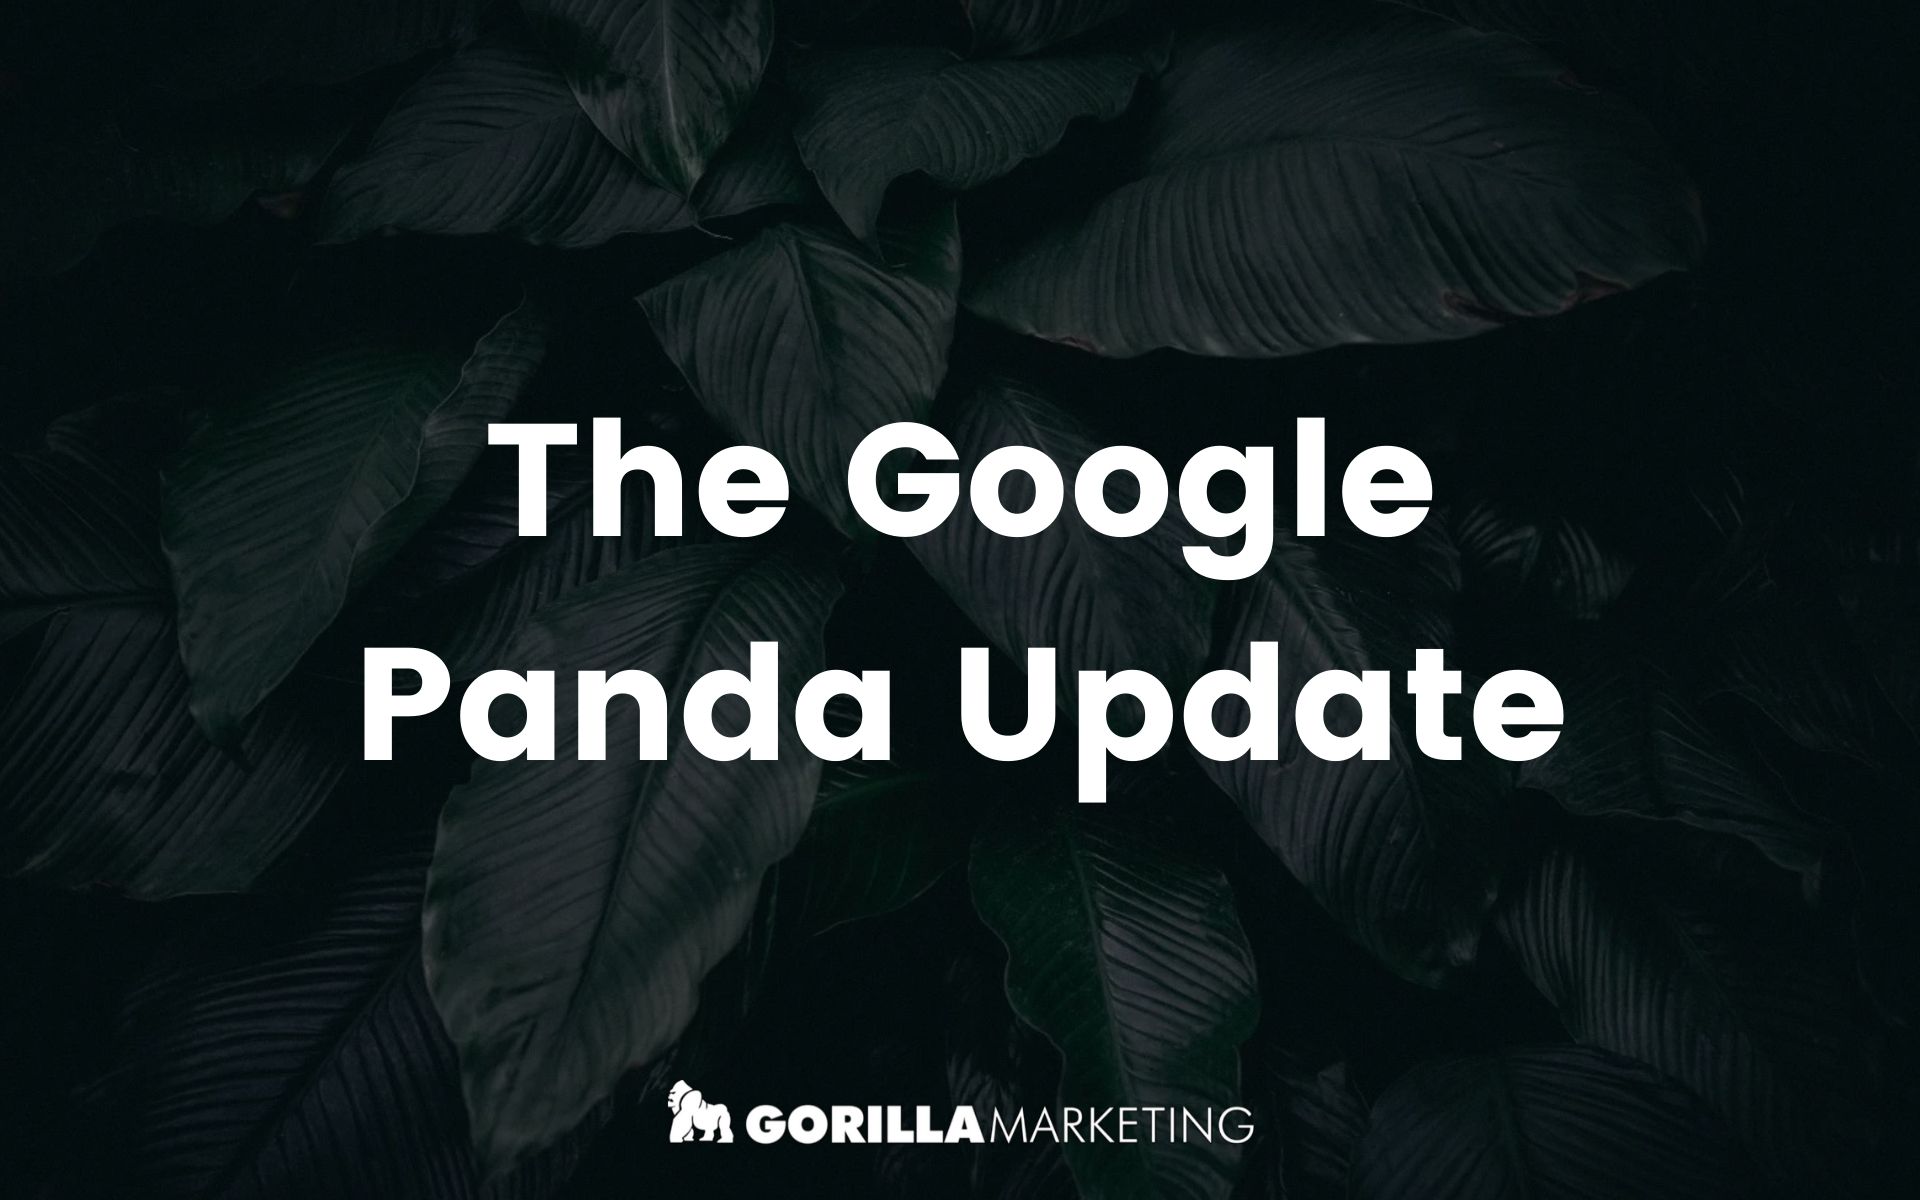 The Panda Update